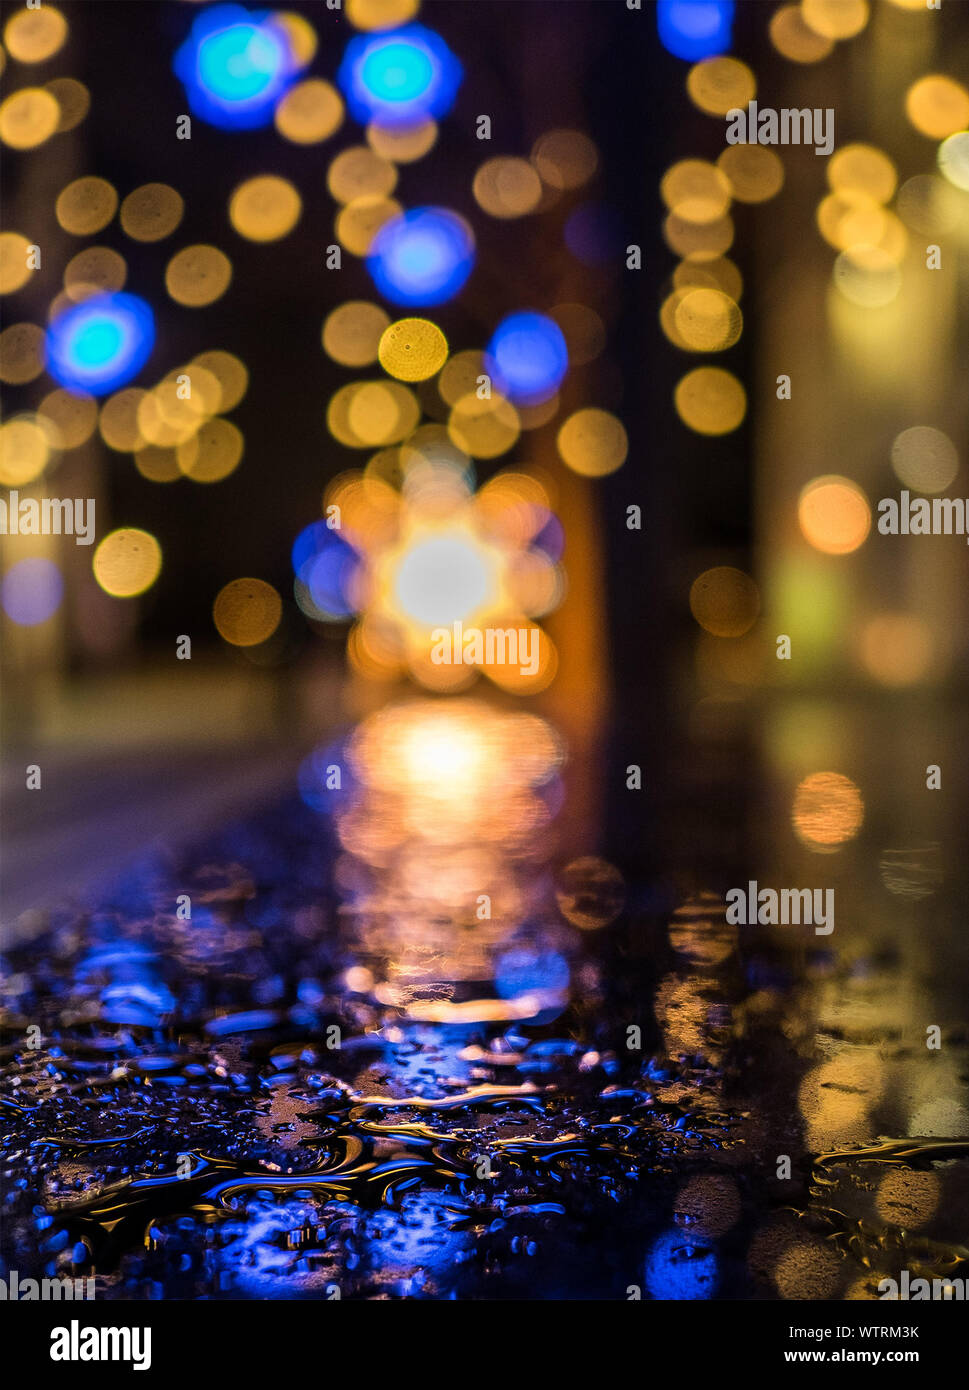 Surface Level Image Of Wet Street Against Illuminated Christmas Lights At  Night Stock Photo - Alamy